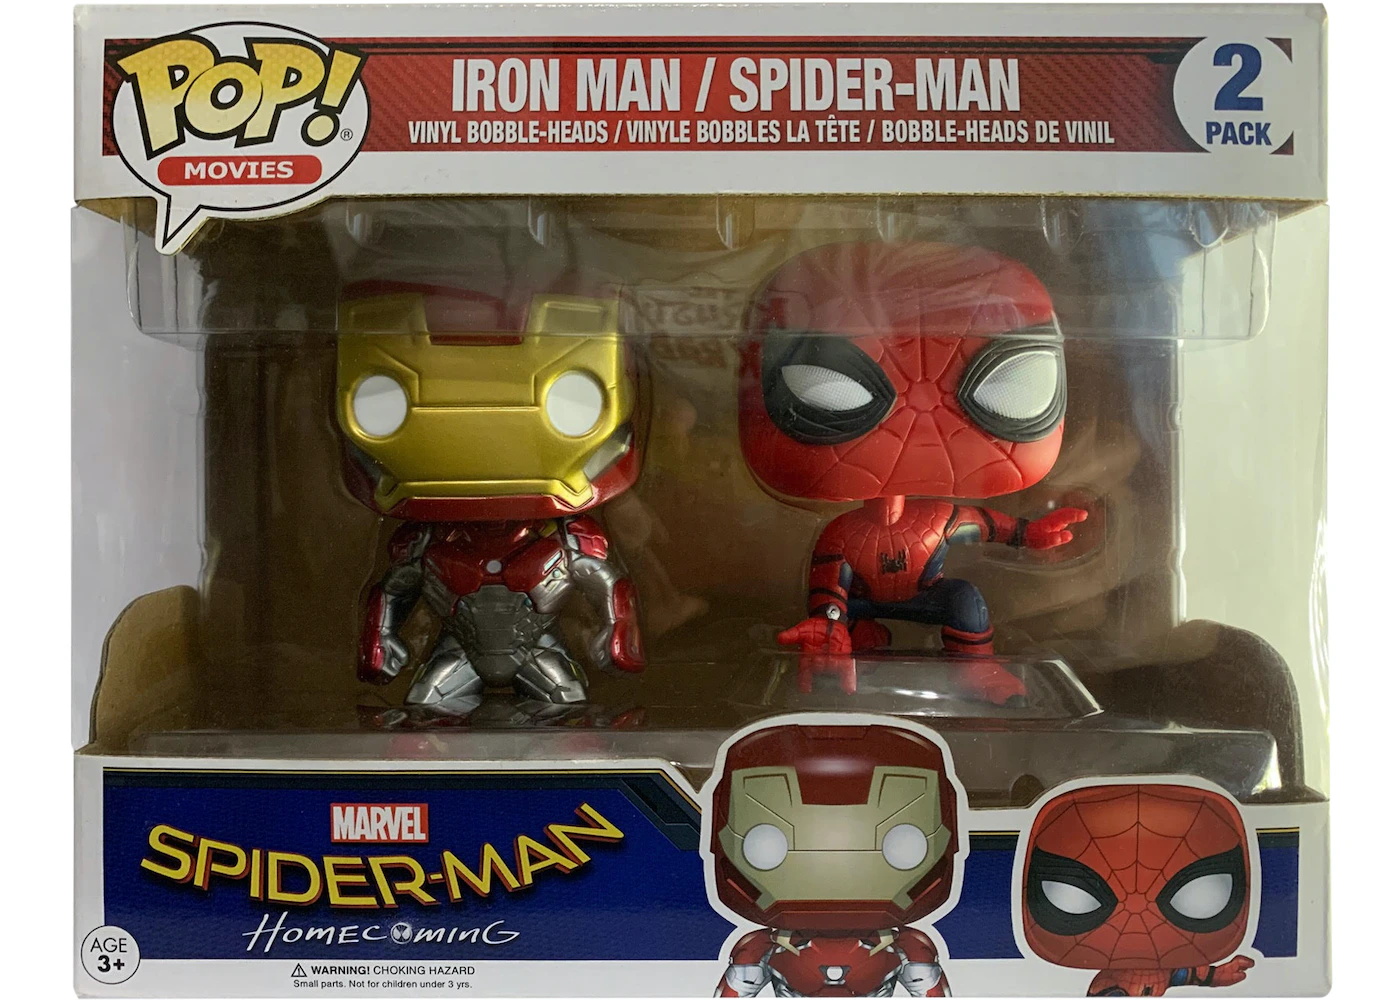 Funko Pop! Movies Marvel Spiderman Iron Man